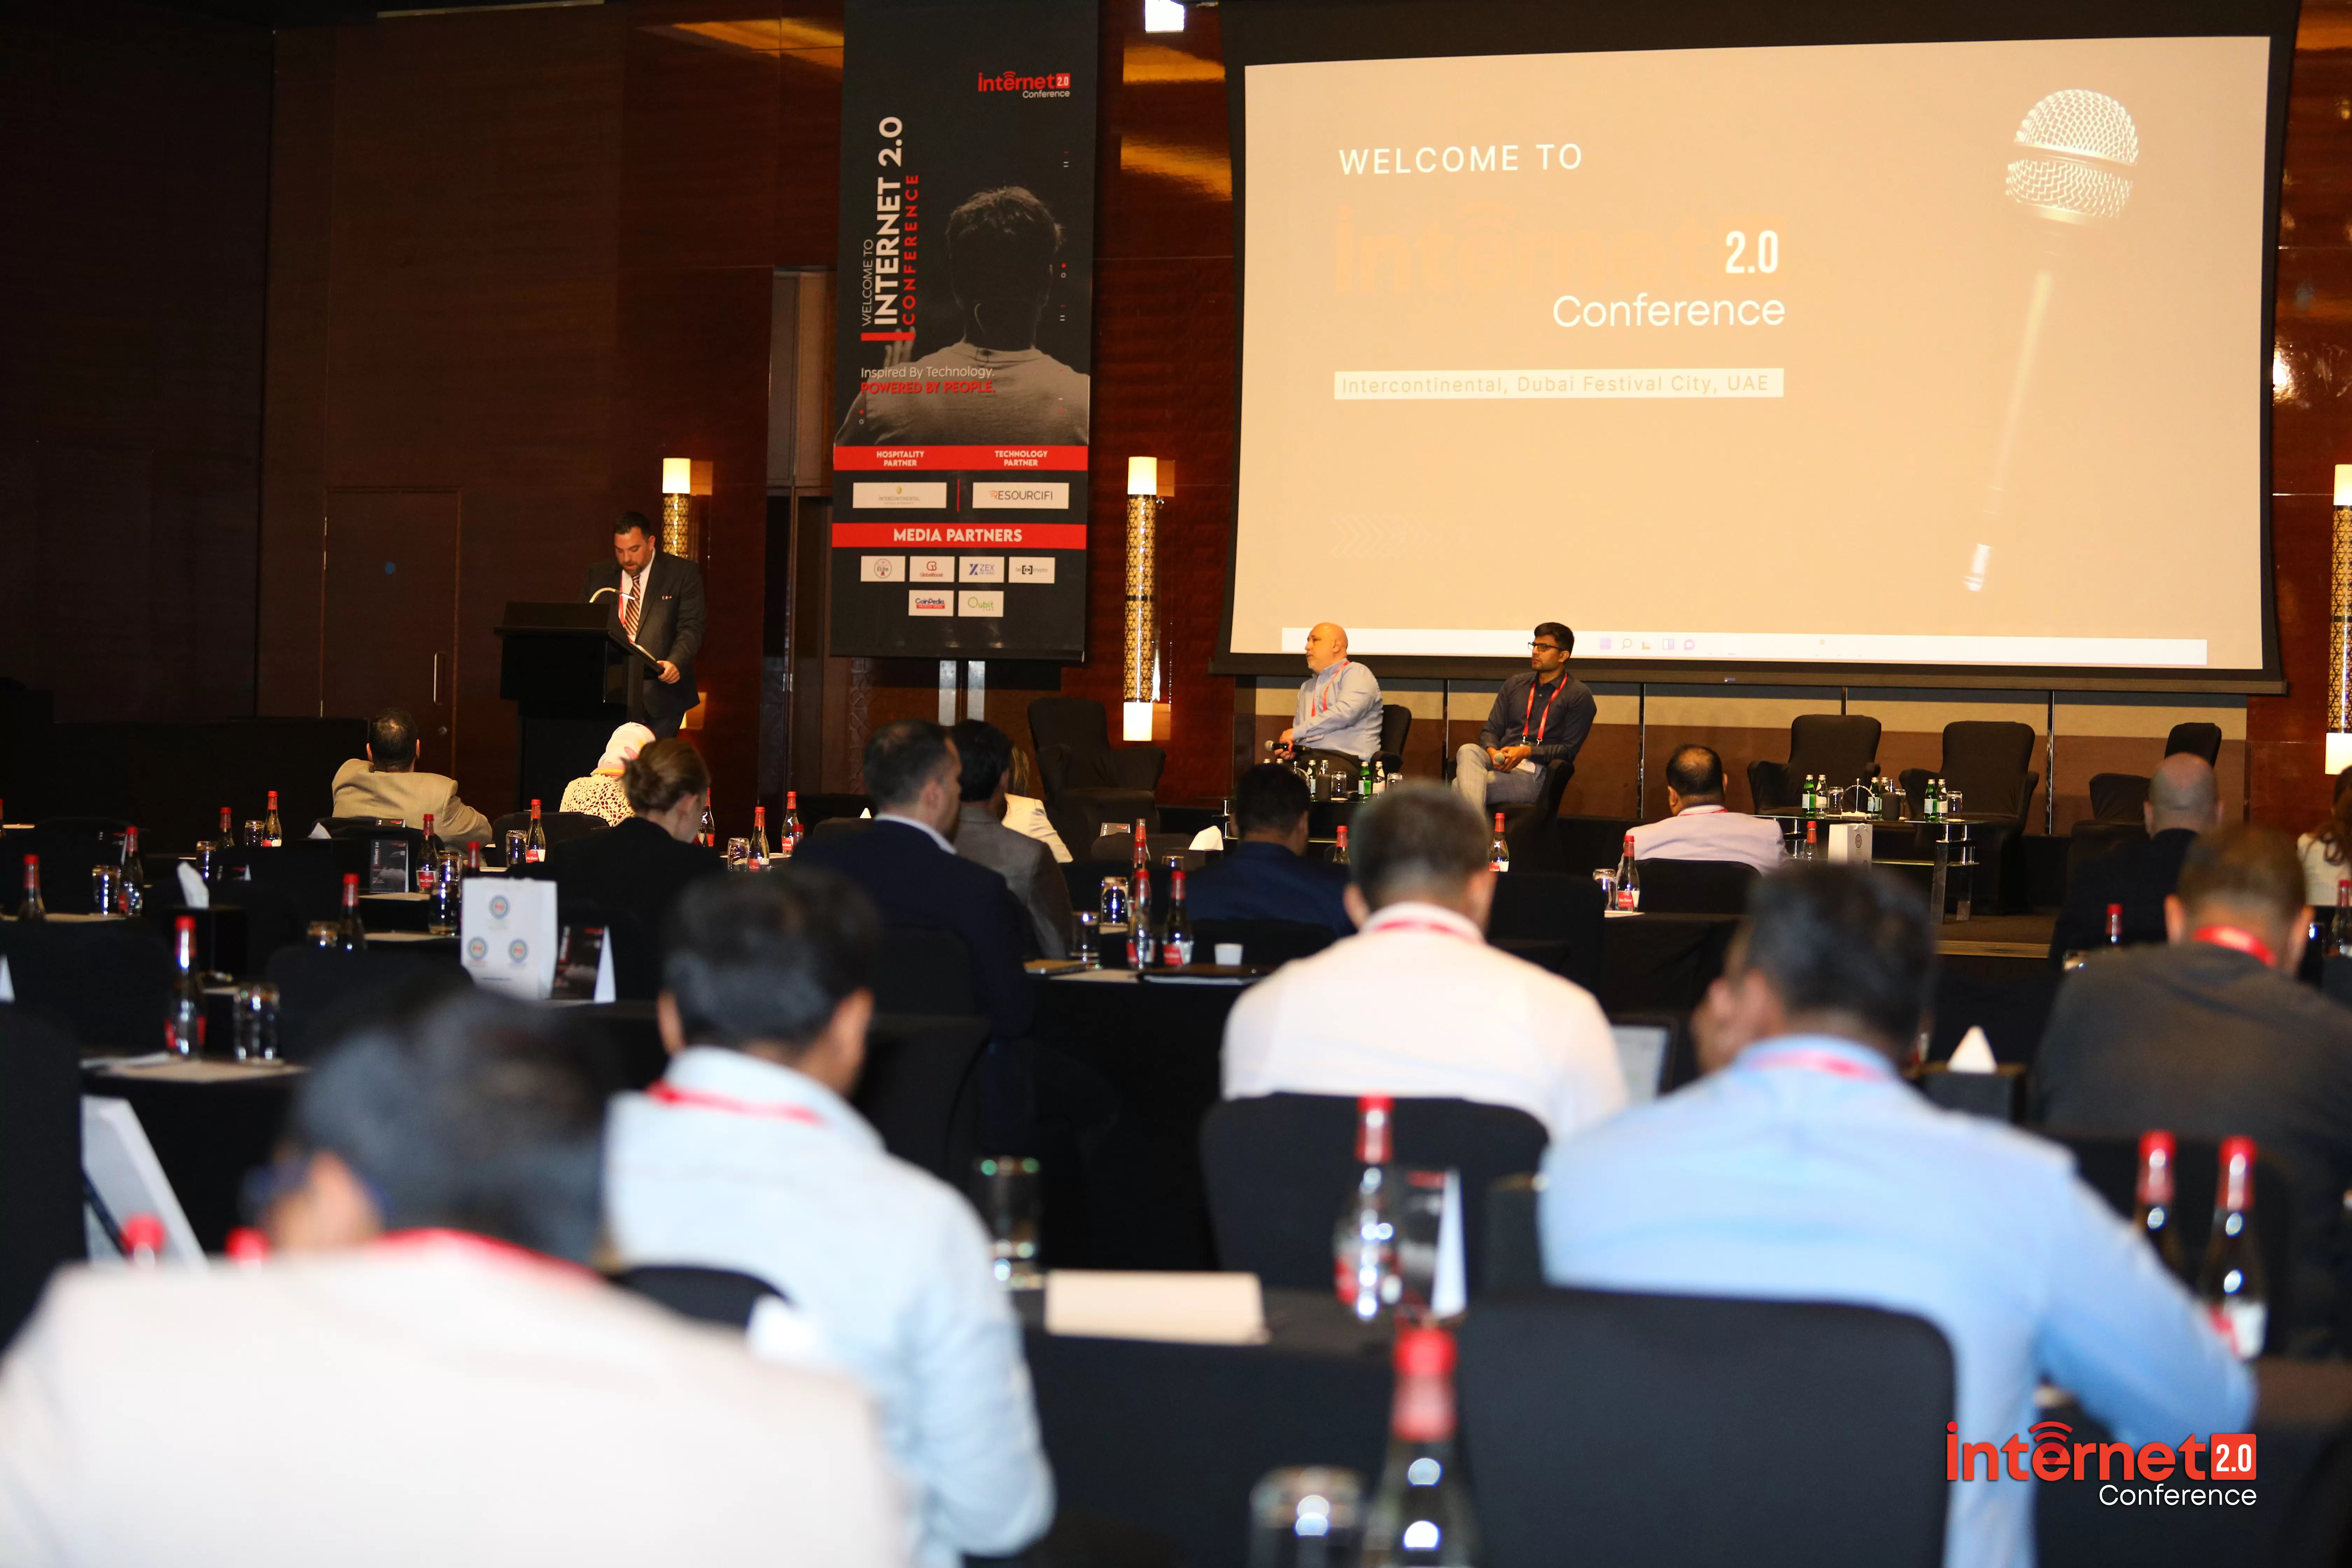 Internet 2.0 Conference Dubai